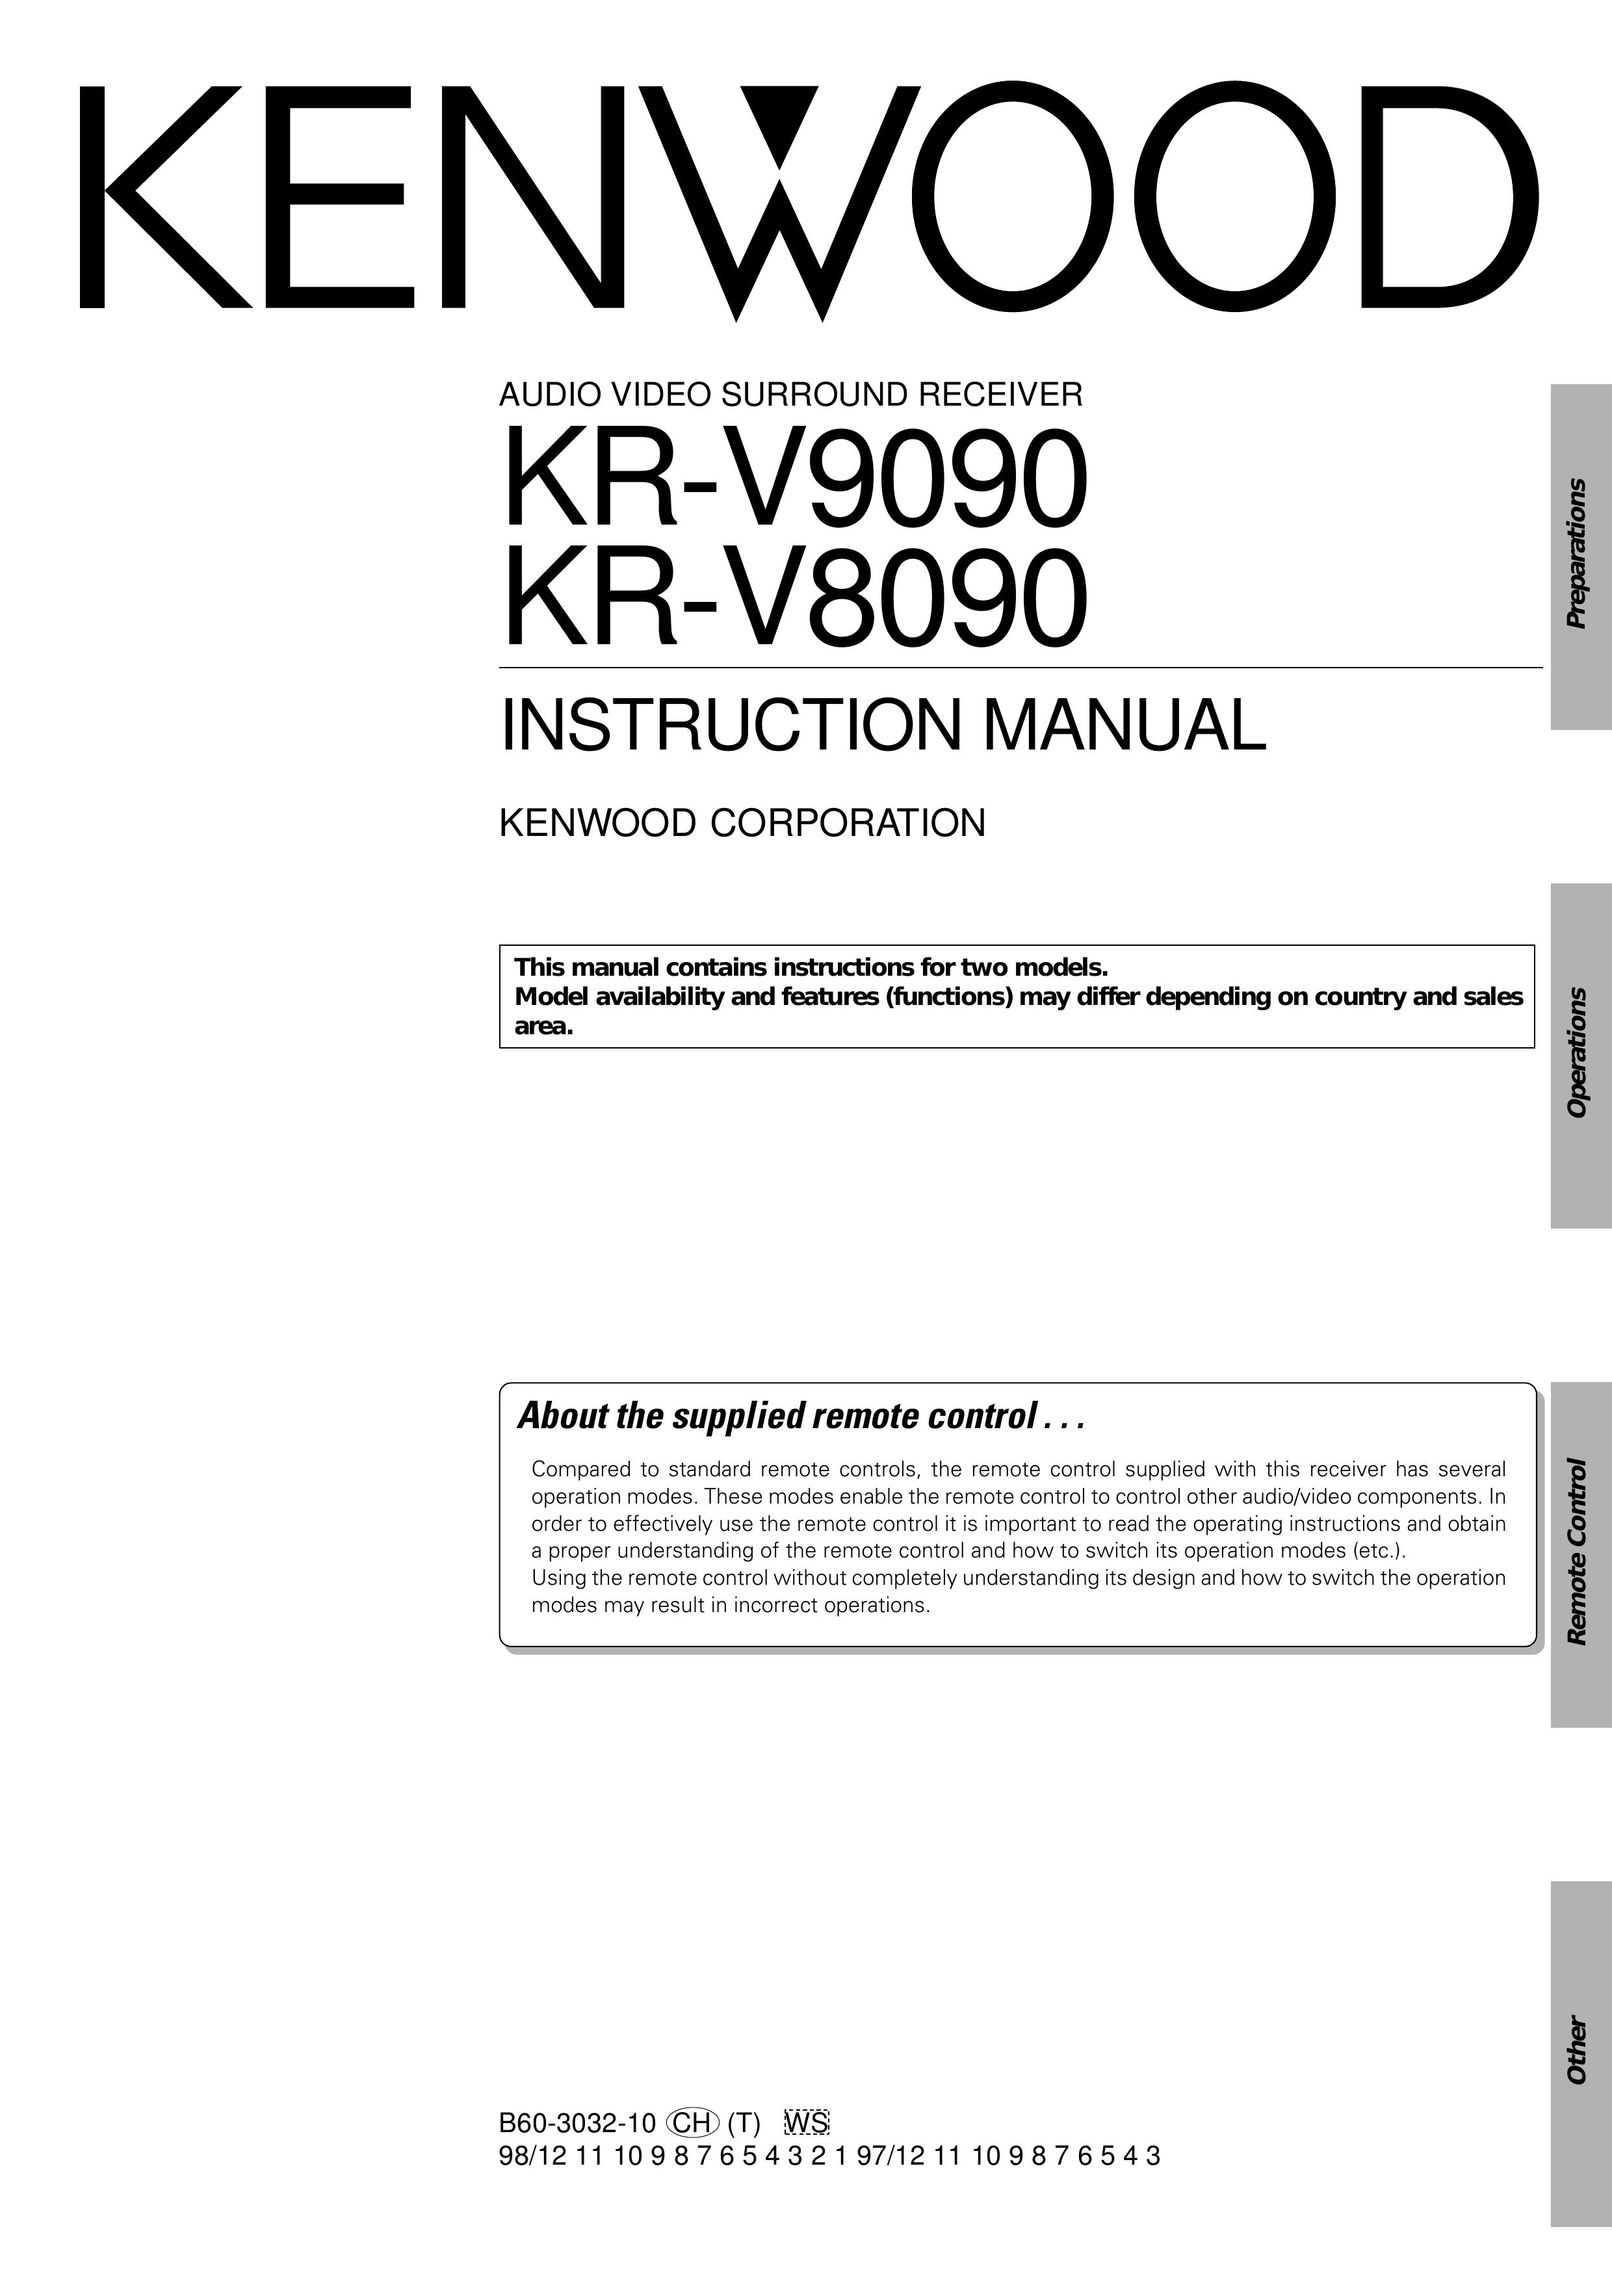 Kenwood KR-V8090 Stereo Receiver User Manual